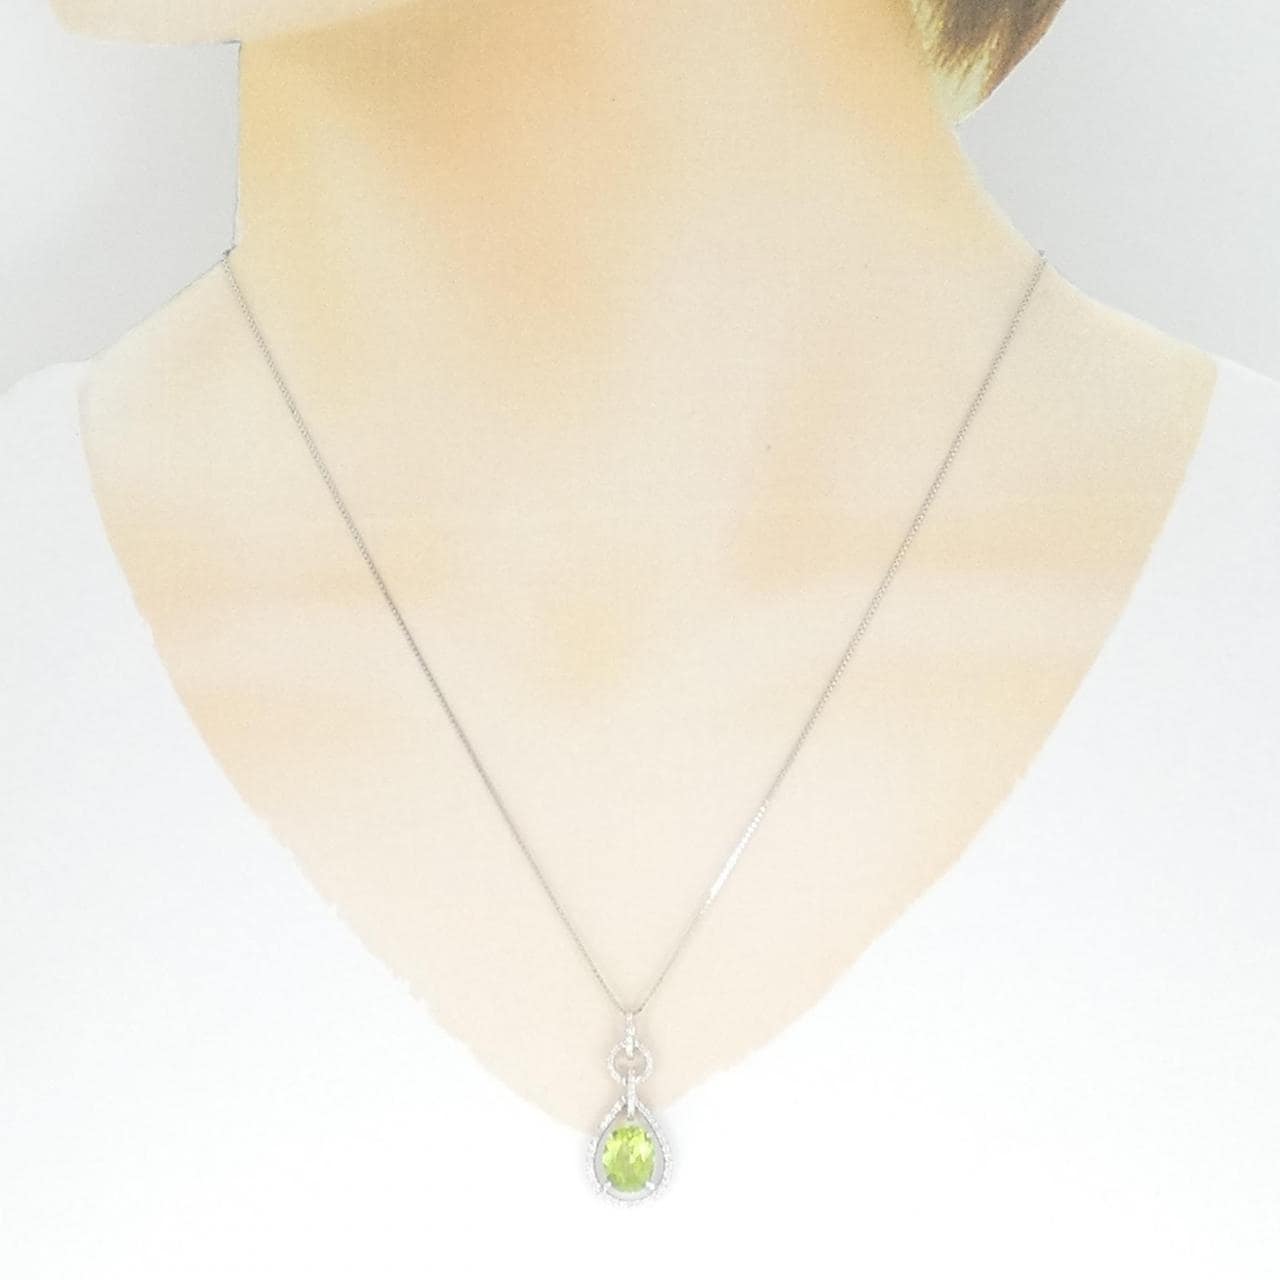 K18WG Peridot necklace 1.92CT